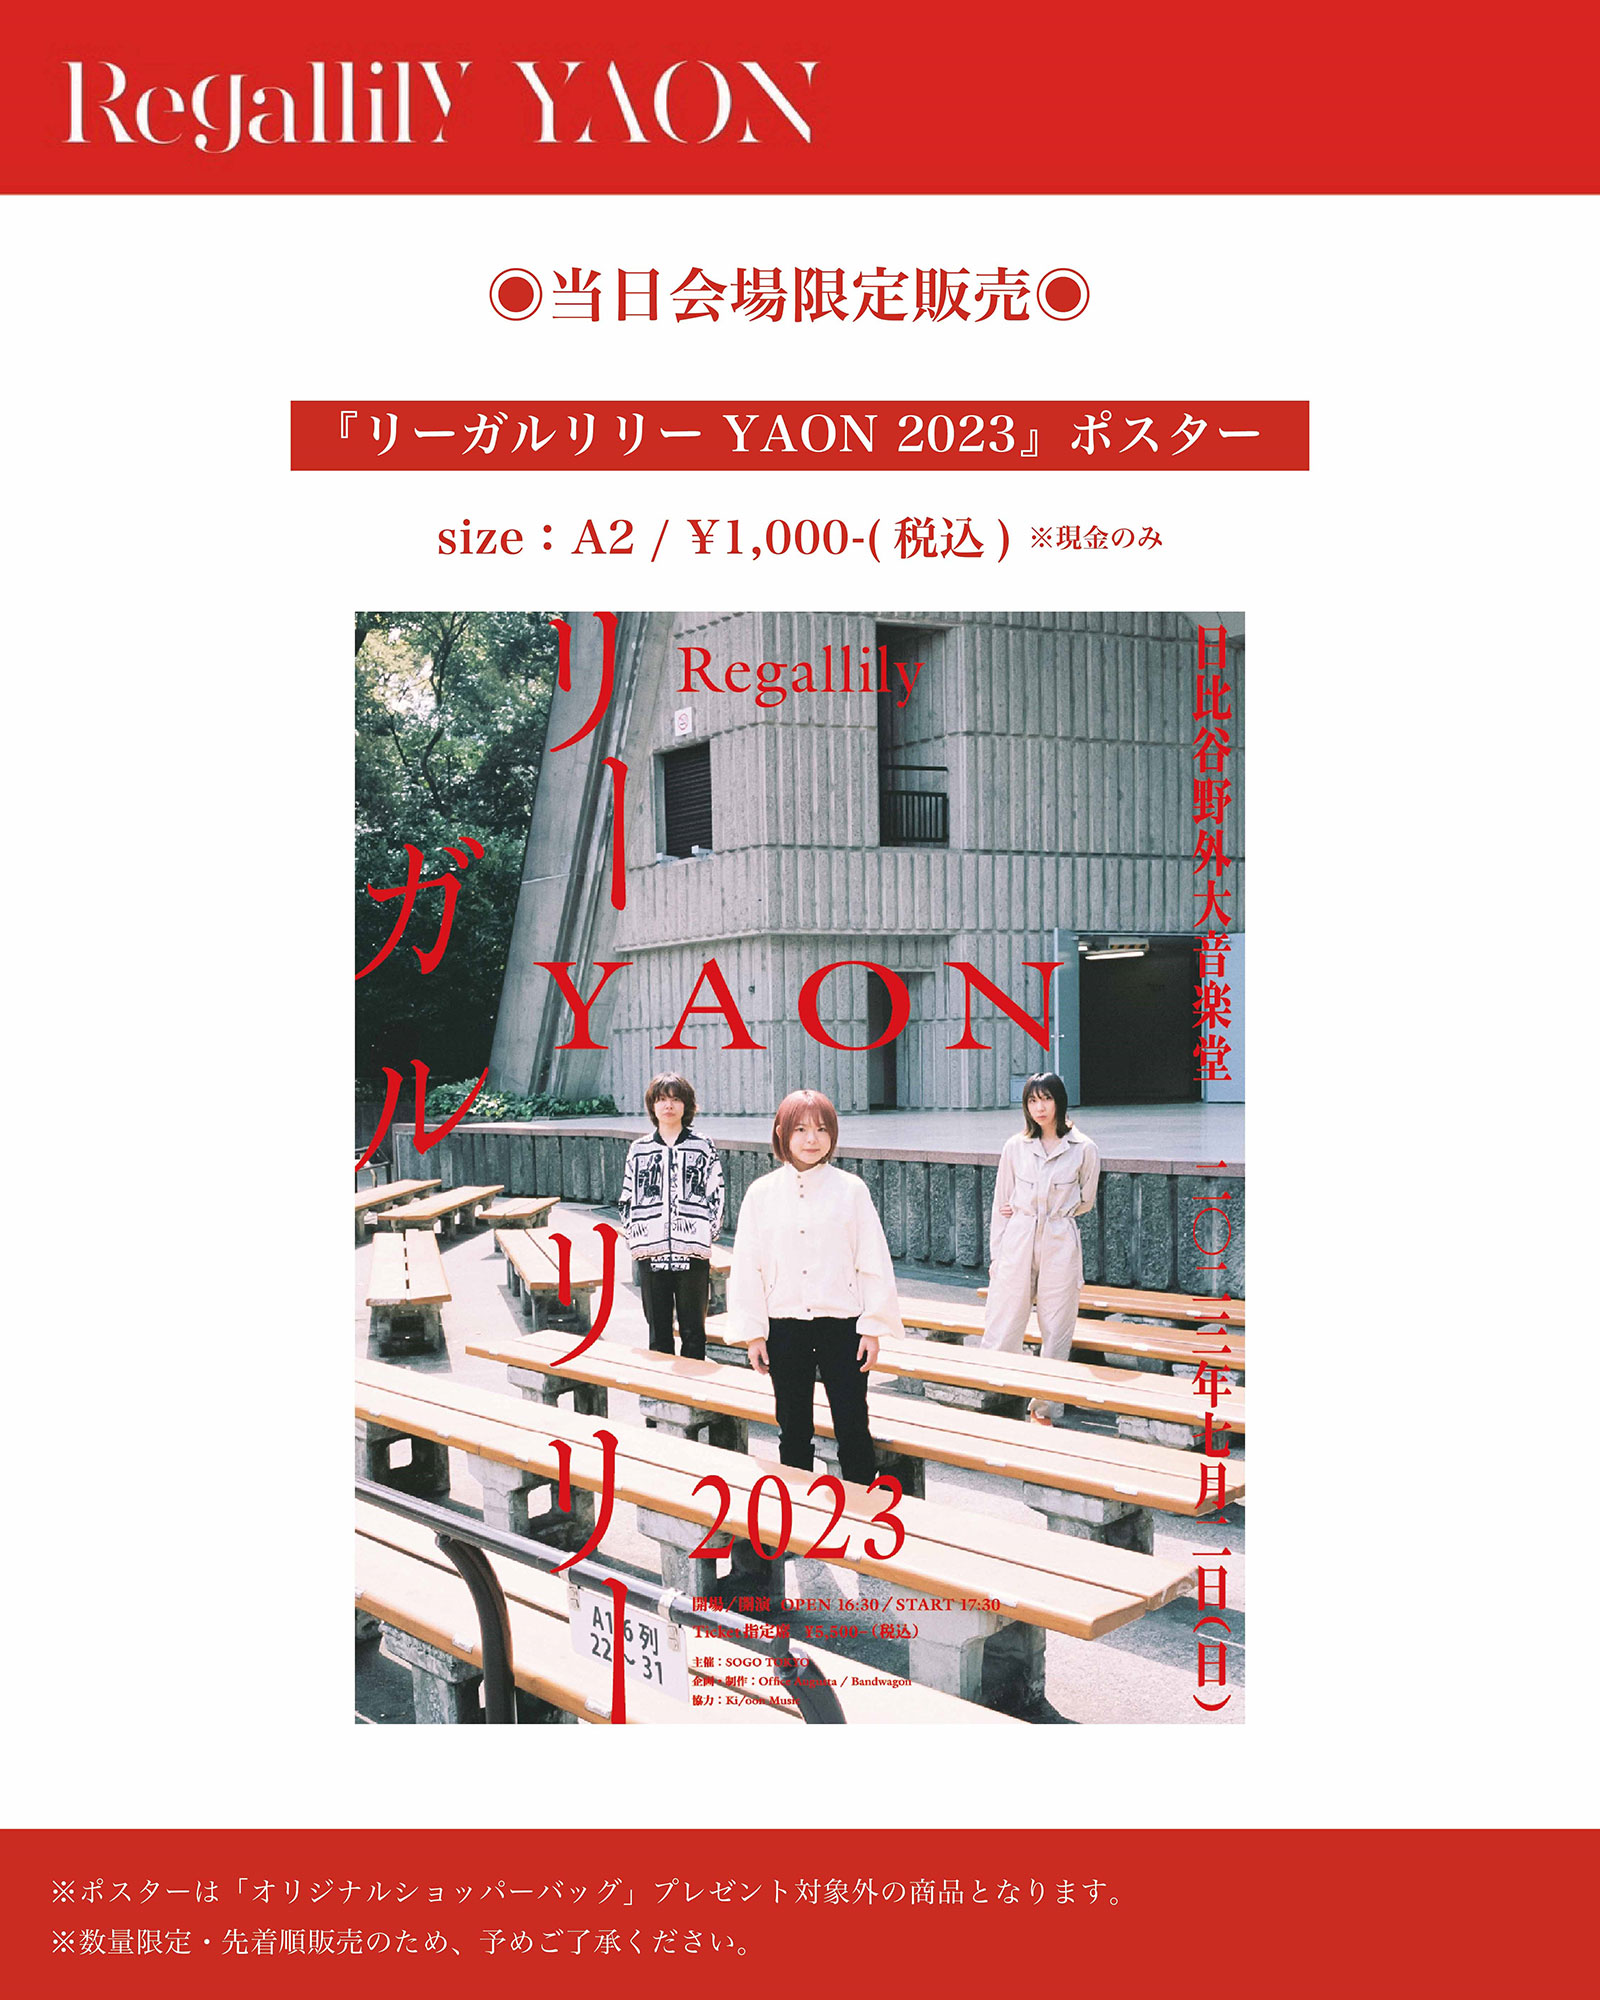 "Regal Lily YAON 2023" sales goods